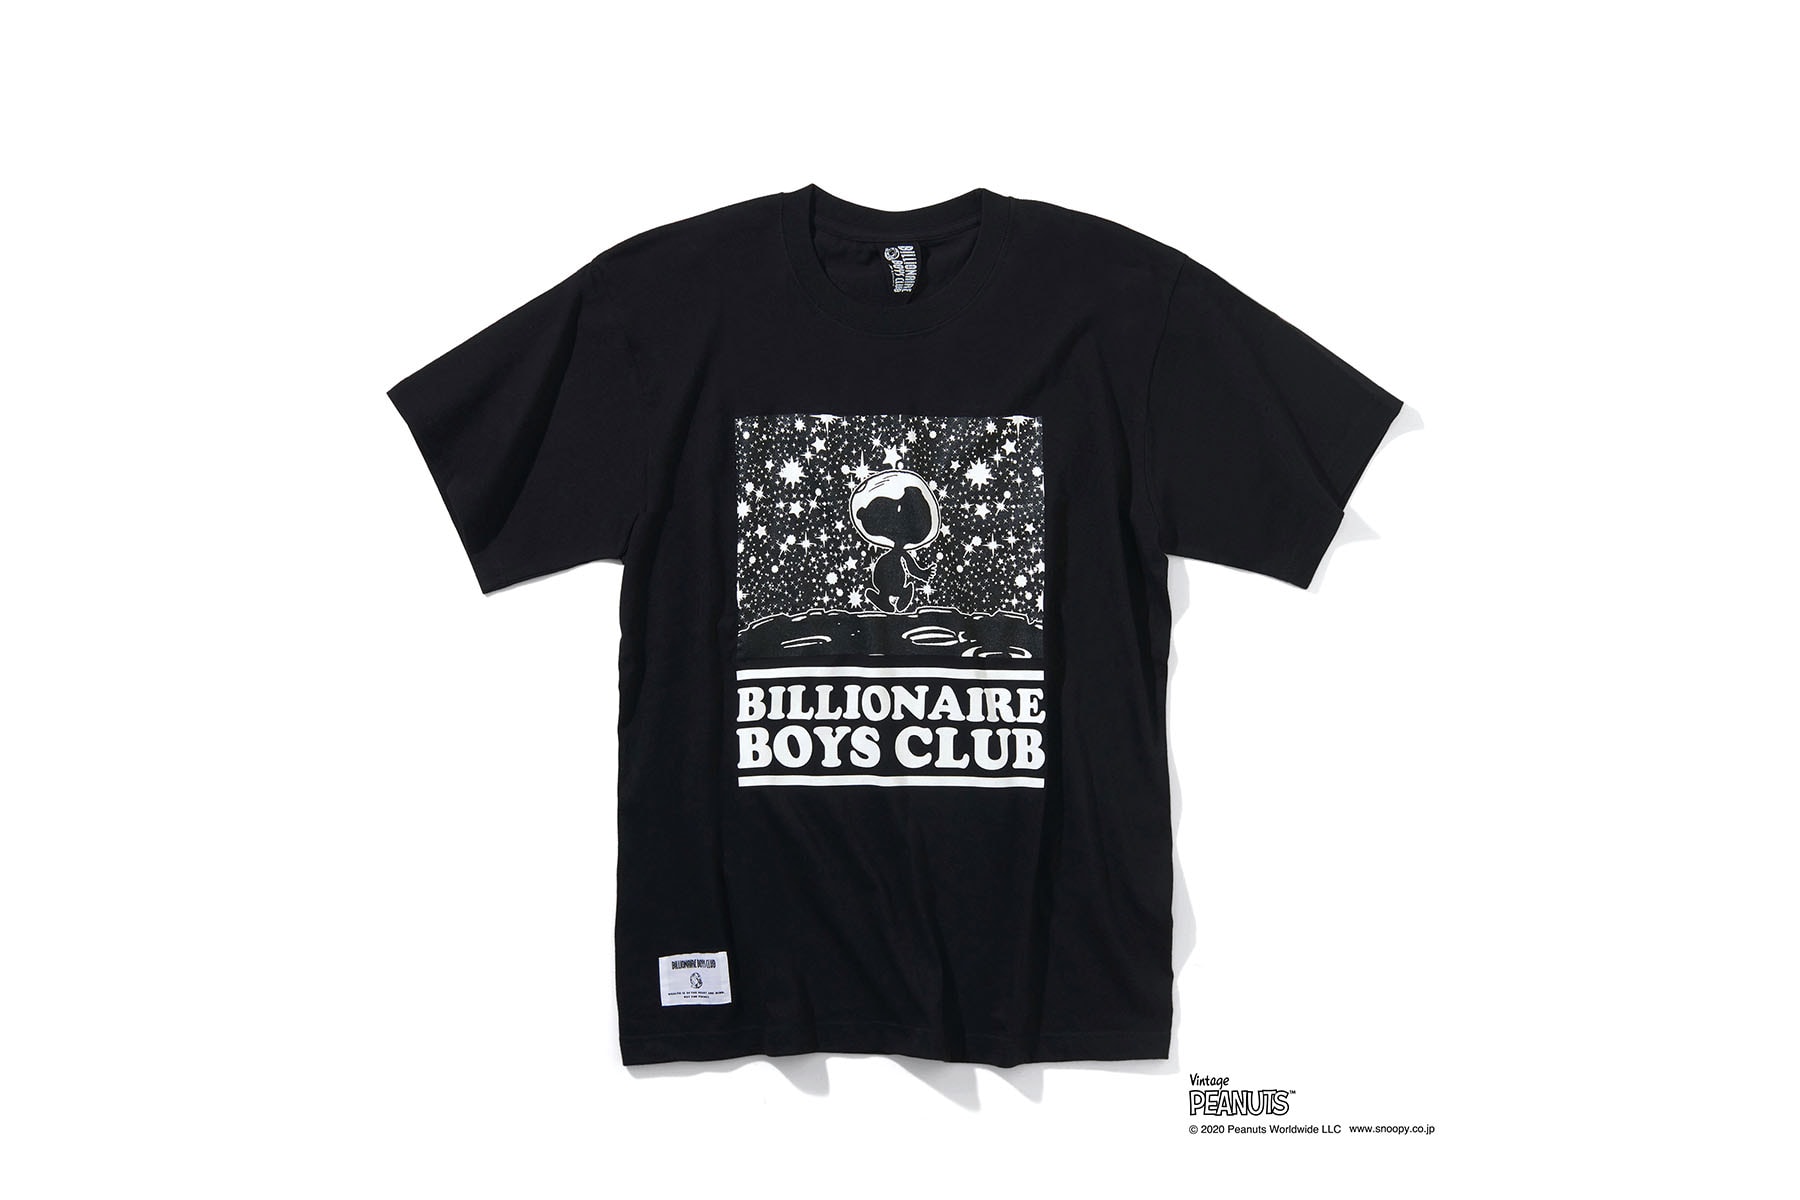 Billionaire Boys Club x PEANUTS のコラボカプセルコレクションが発売される BILLIONAIRE BOYS CLUB x PEANUT releases capsule collection 